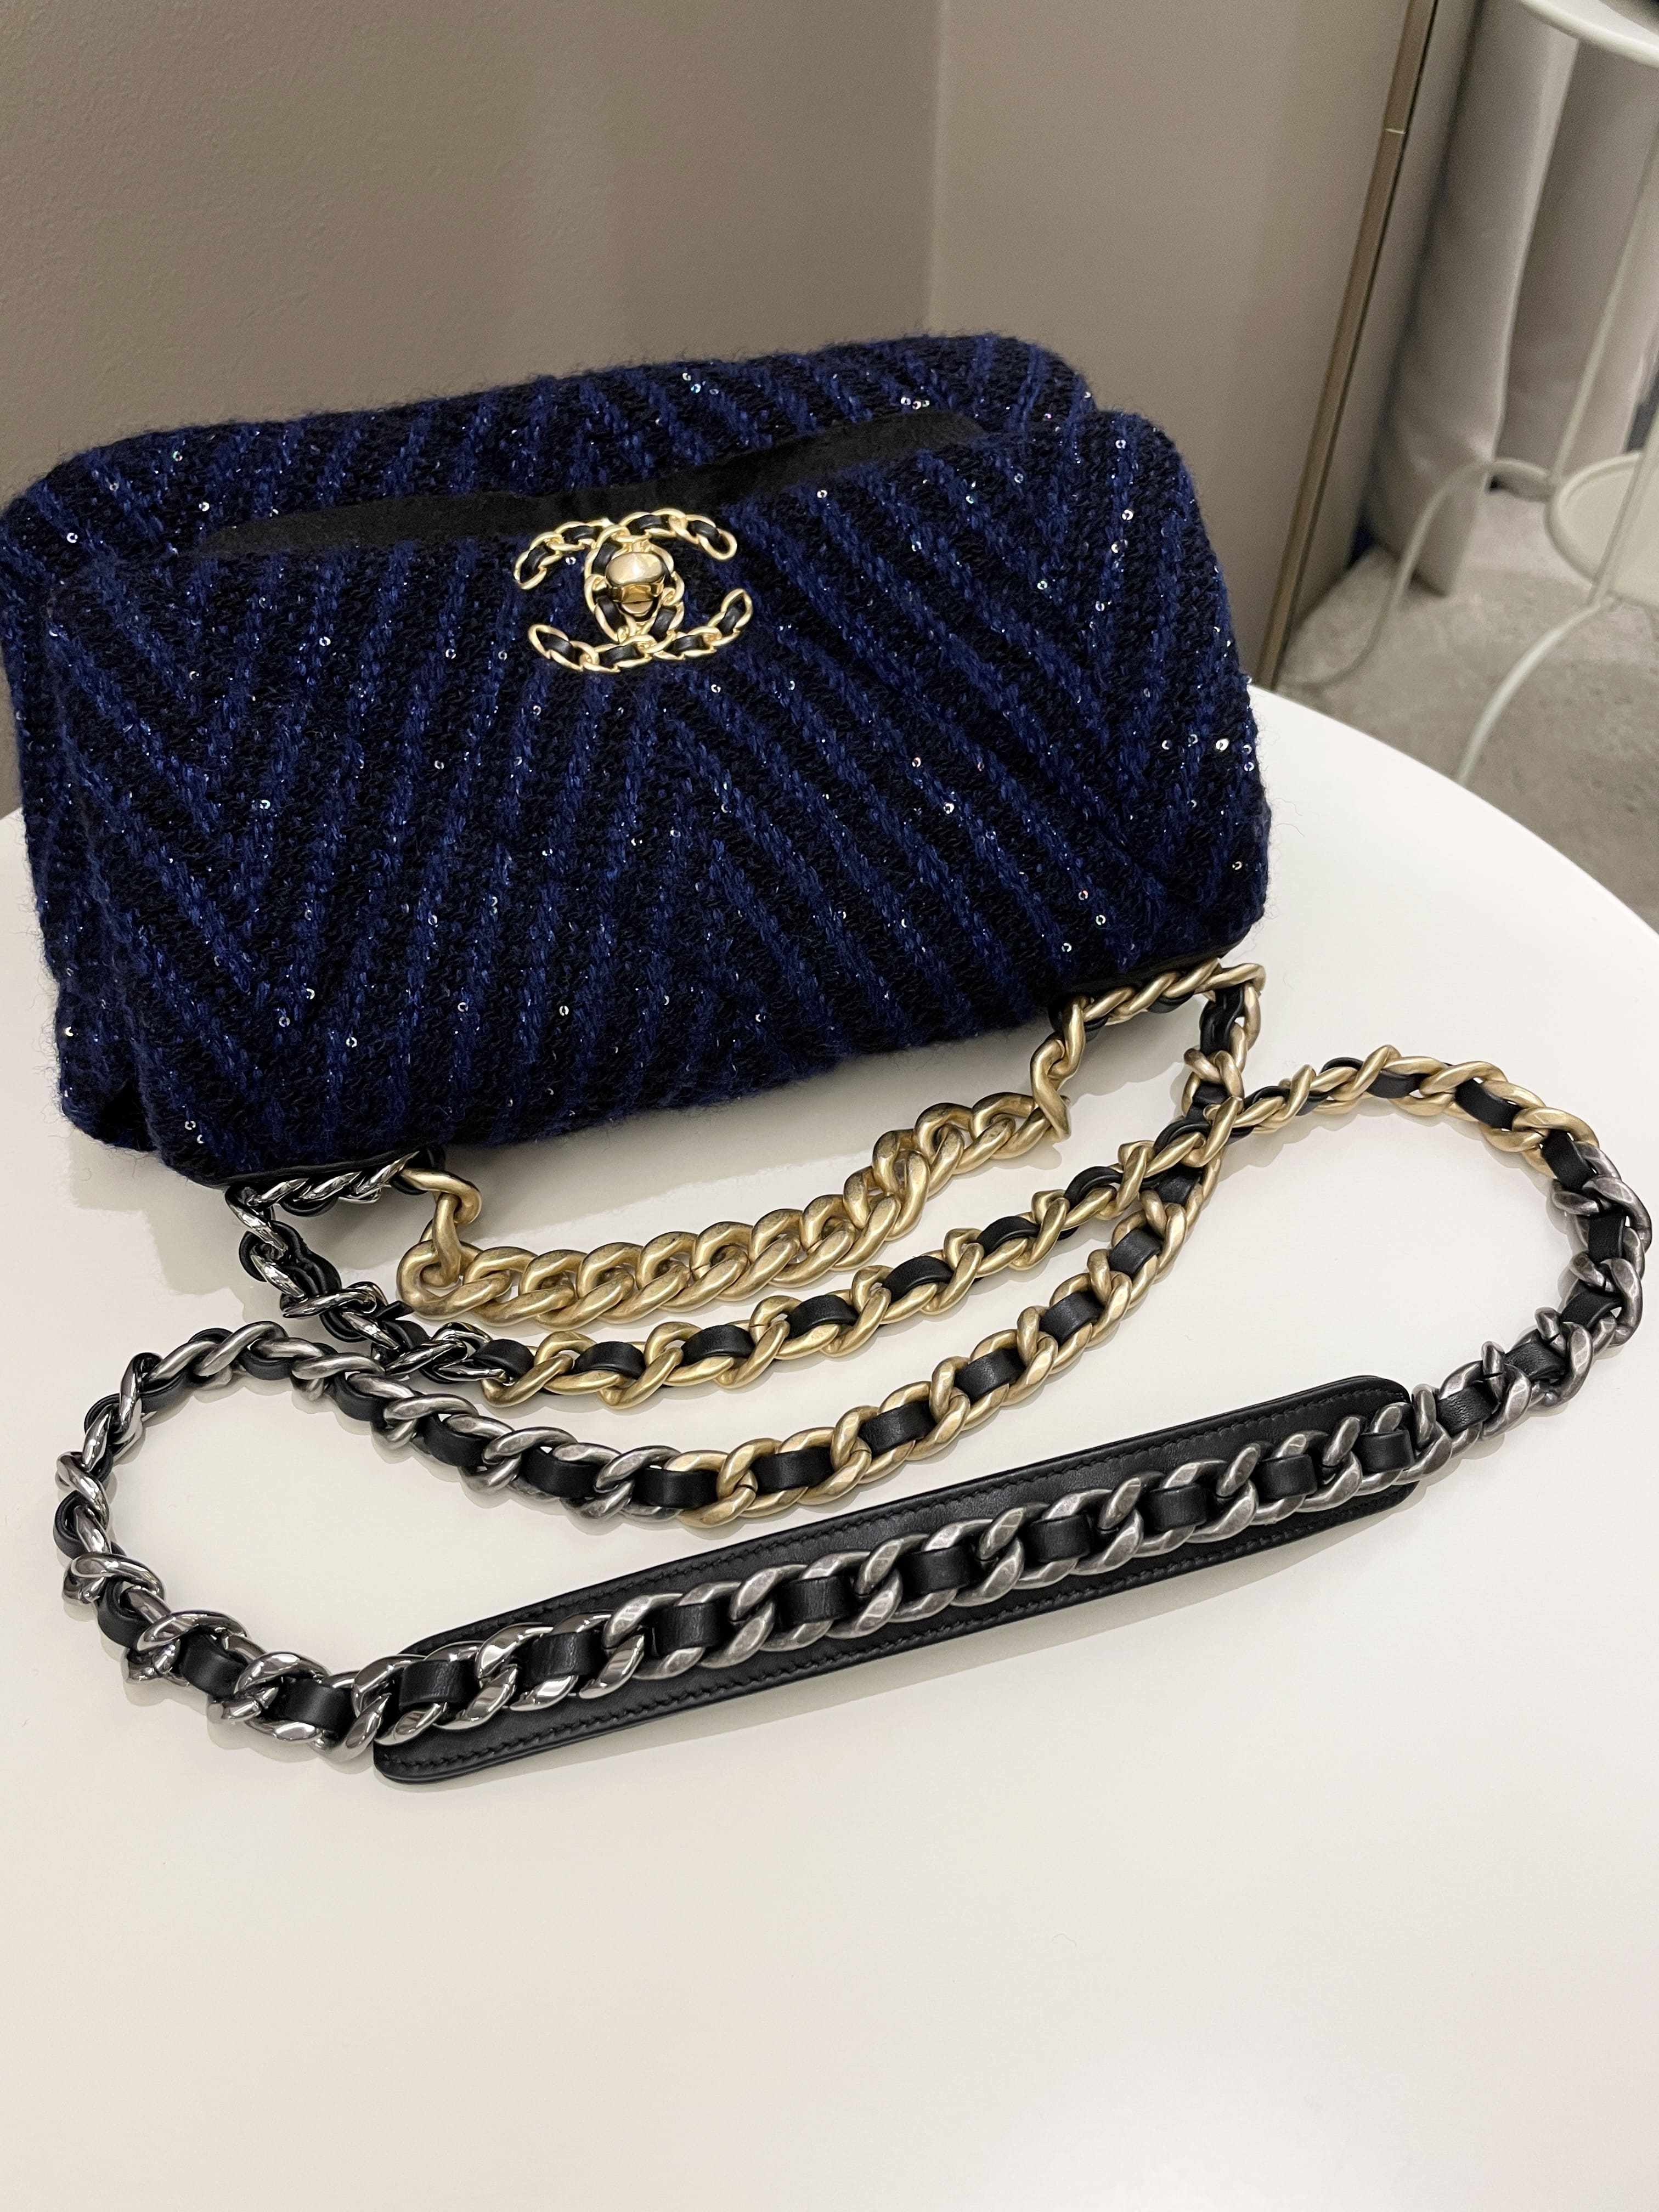 Chanel 19 Flap Bag Black / Blue Tweed Sequin